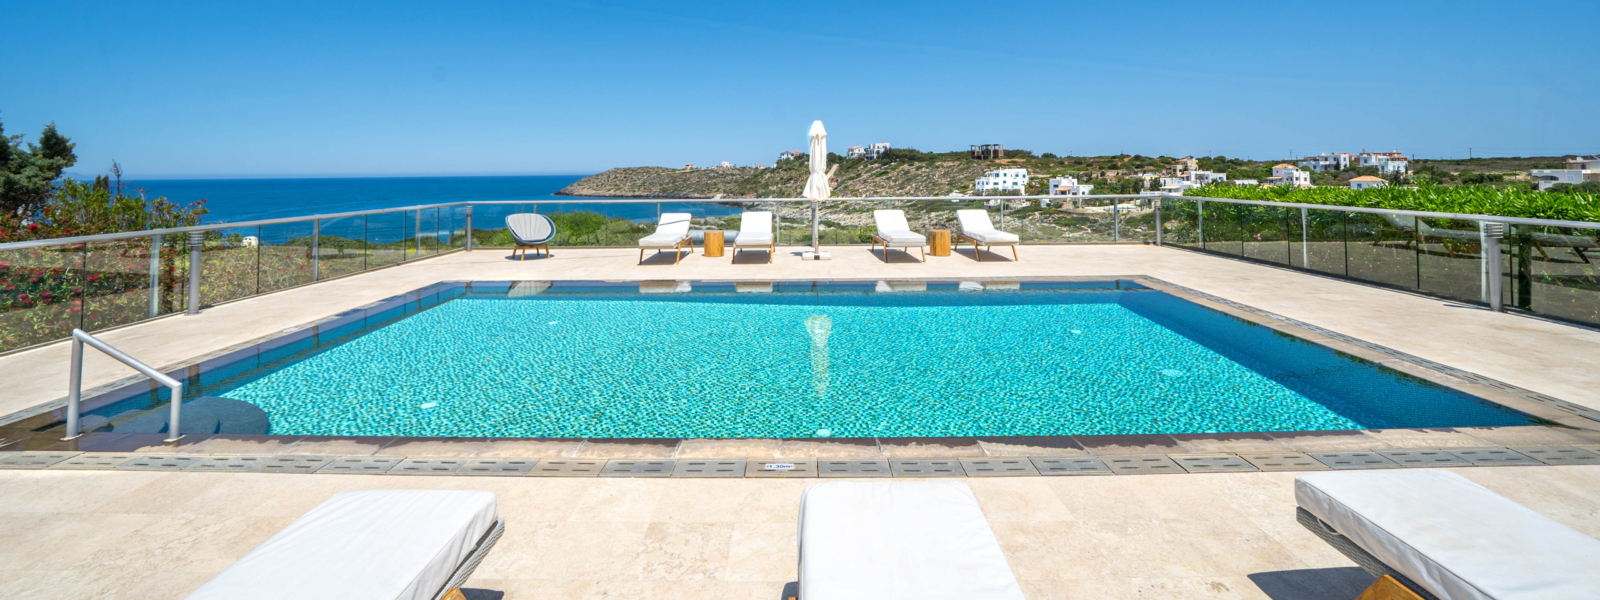 Villa Piscine Privee Crete Vue Mer